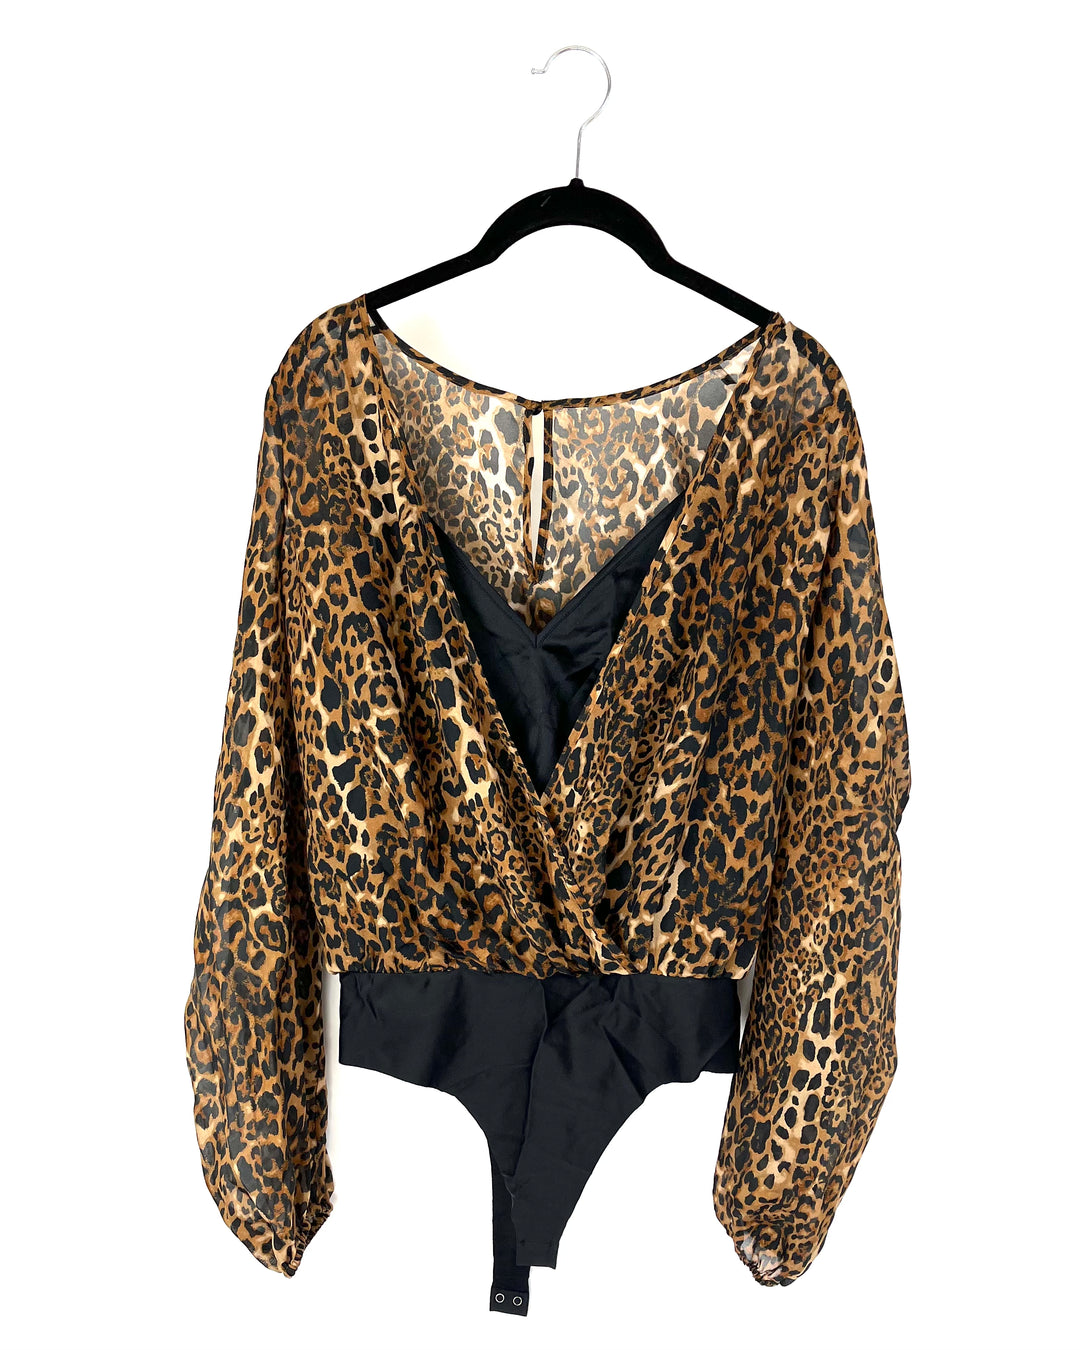 Brown Cheetah Print Long Sleeve Bodysuit - Size 2-4